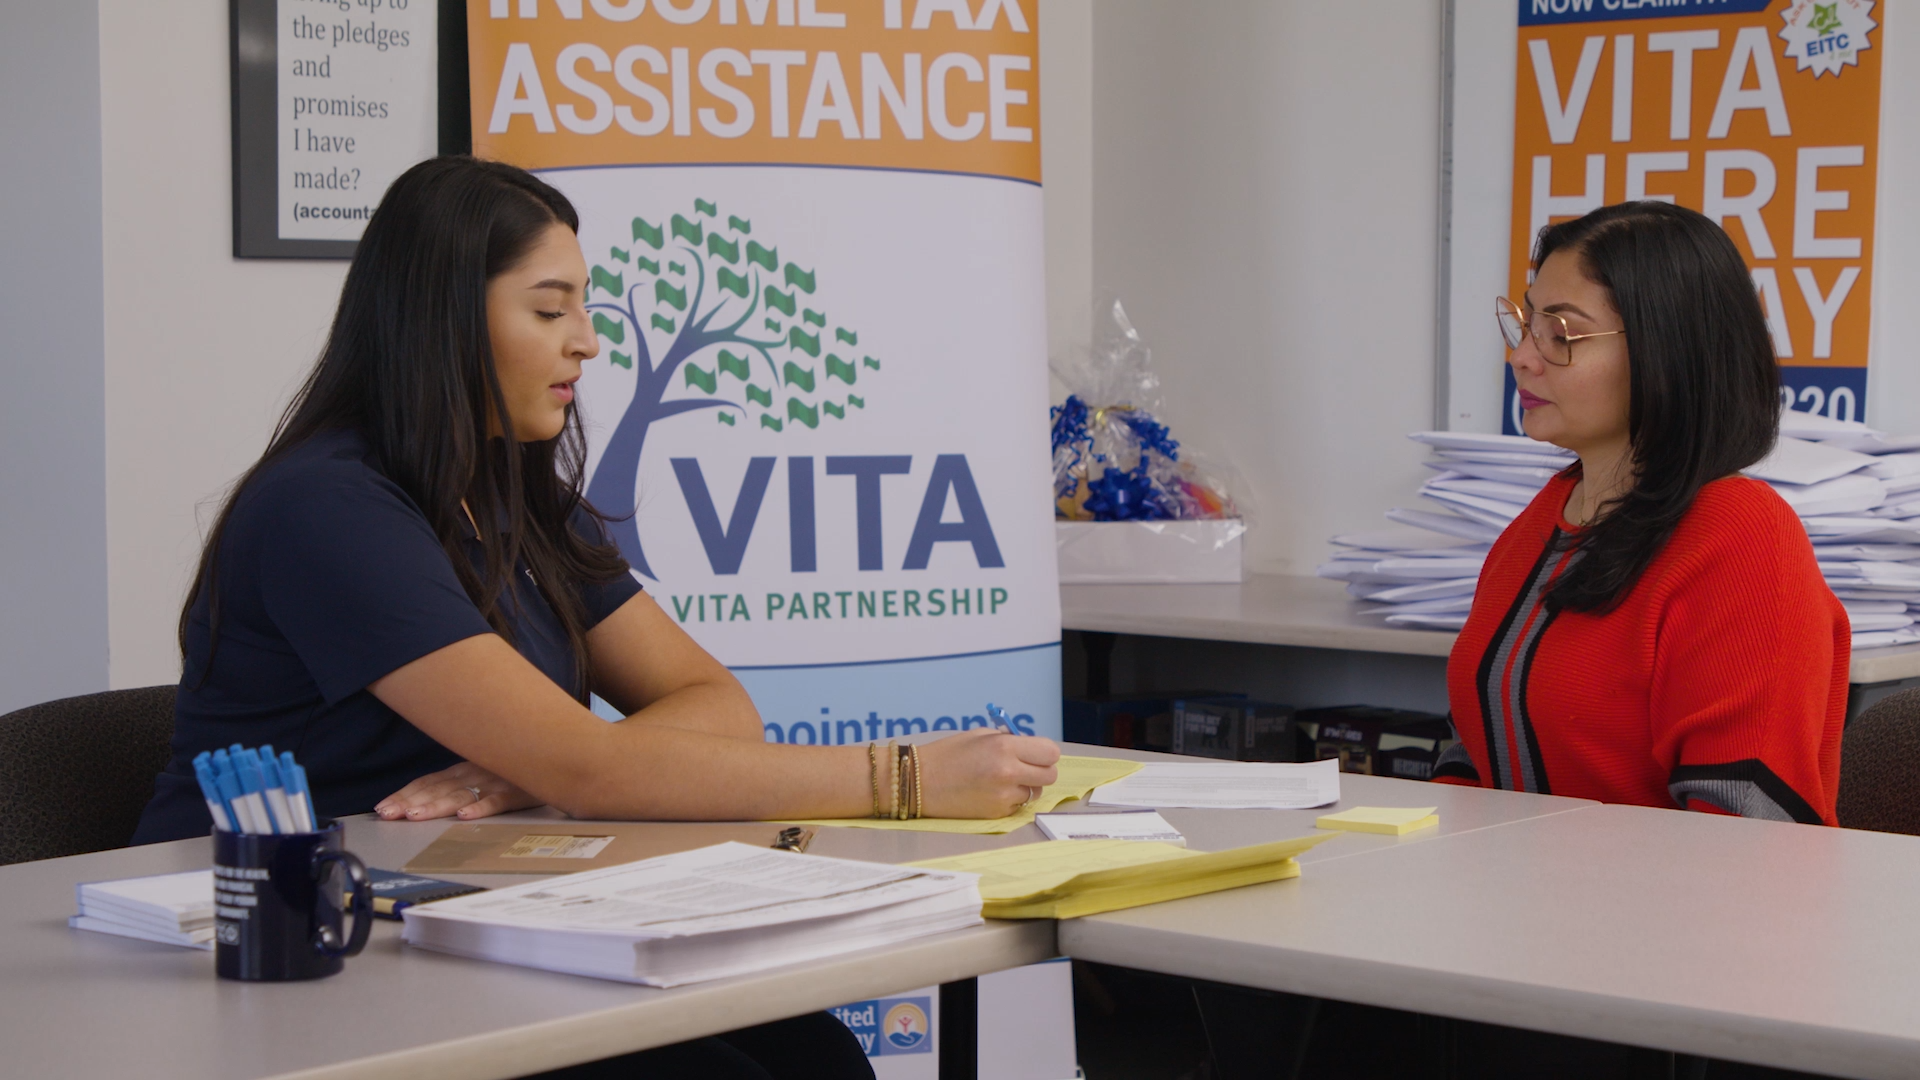 VITA volunteer helping a client